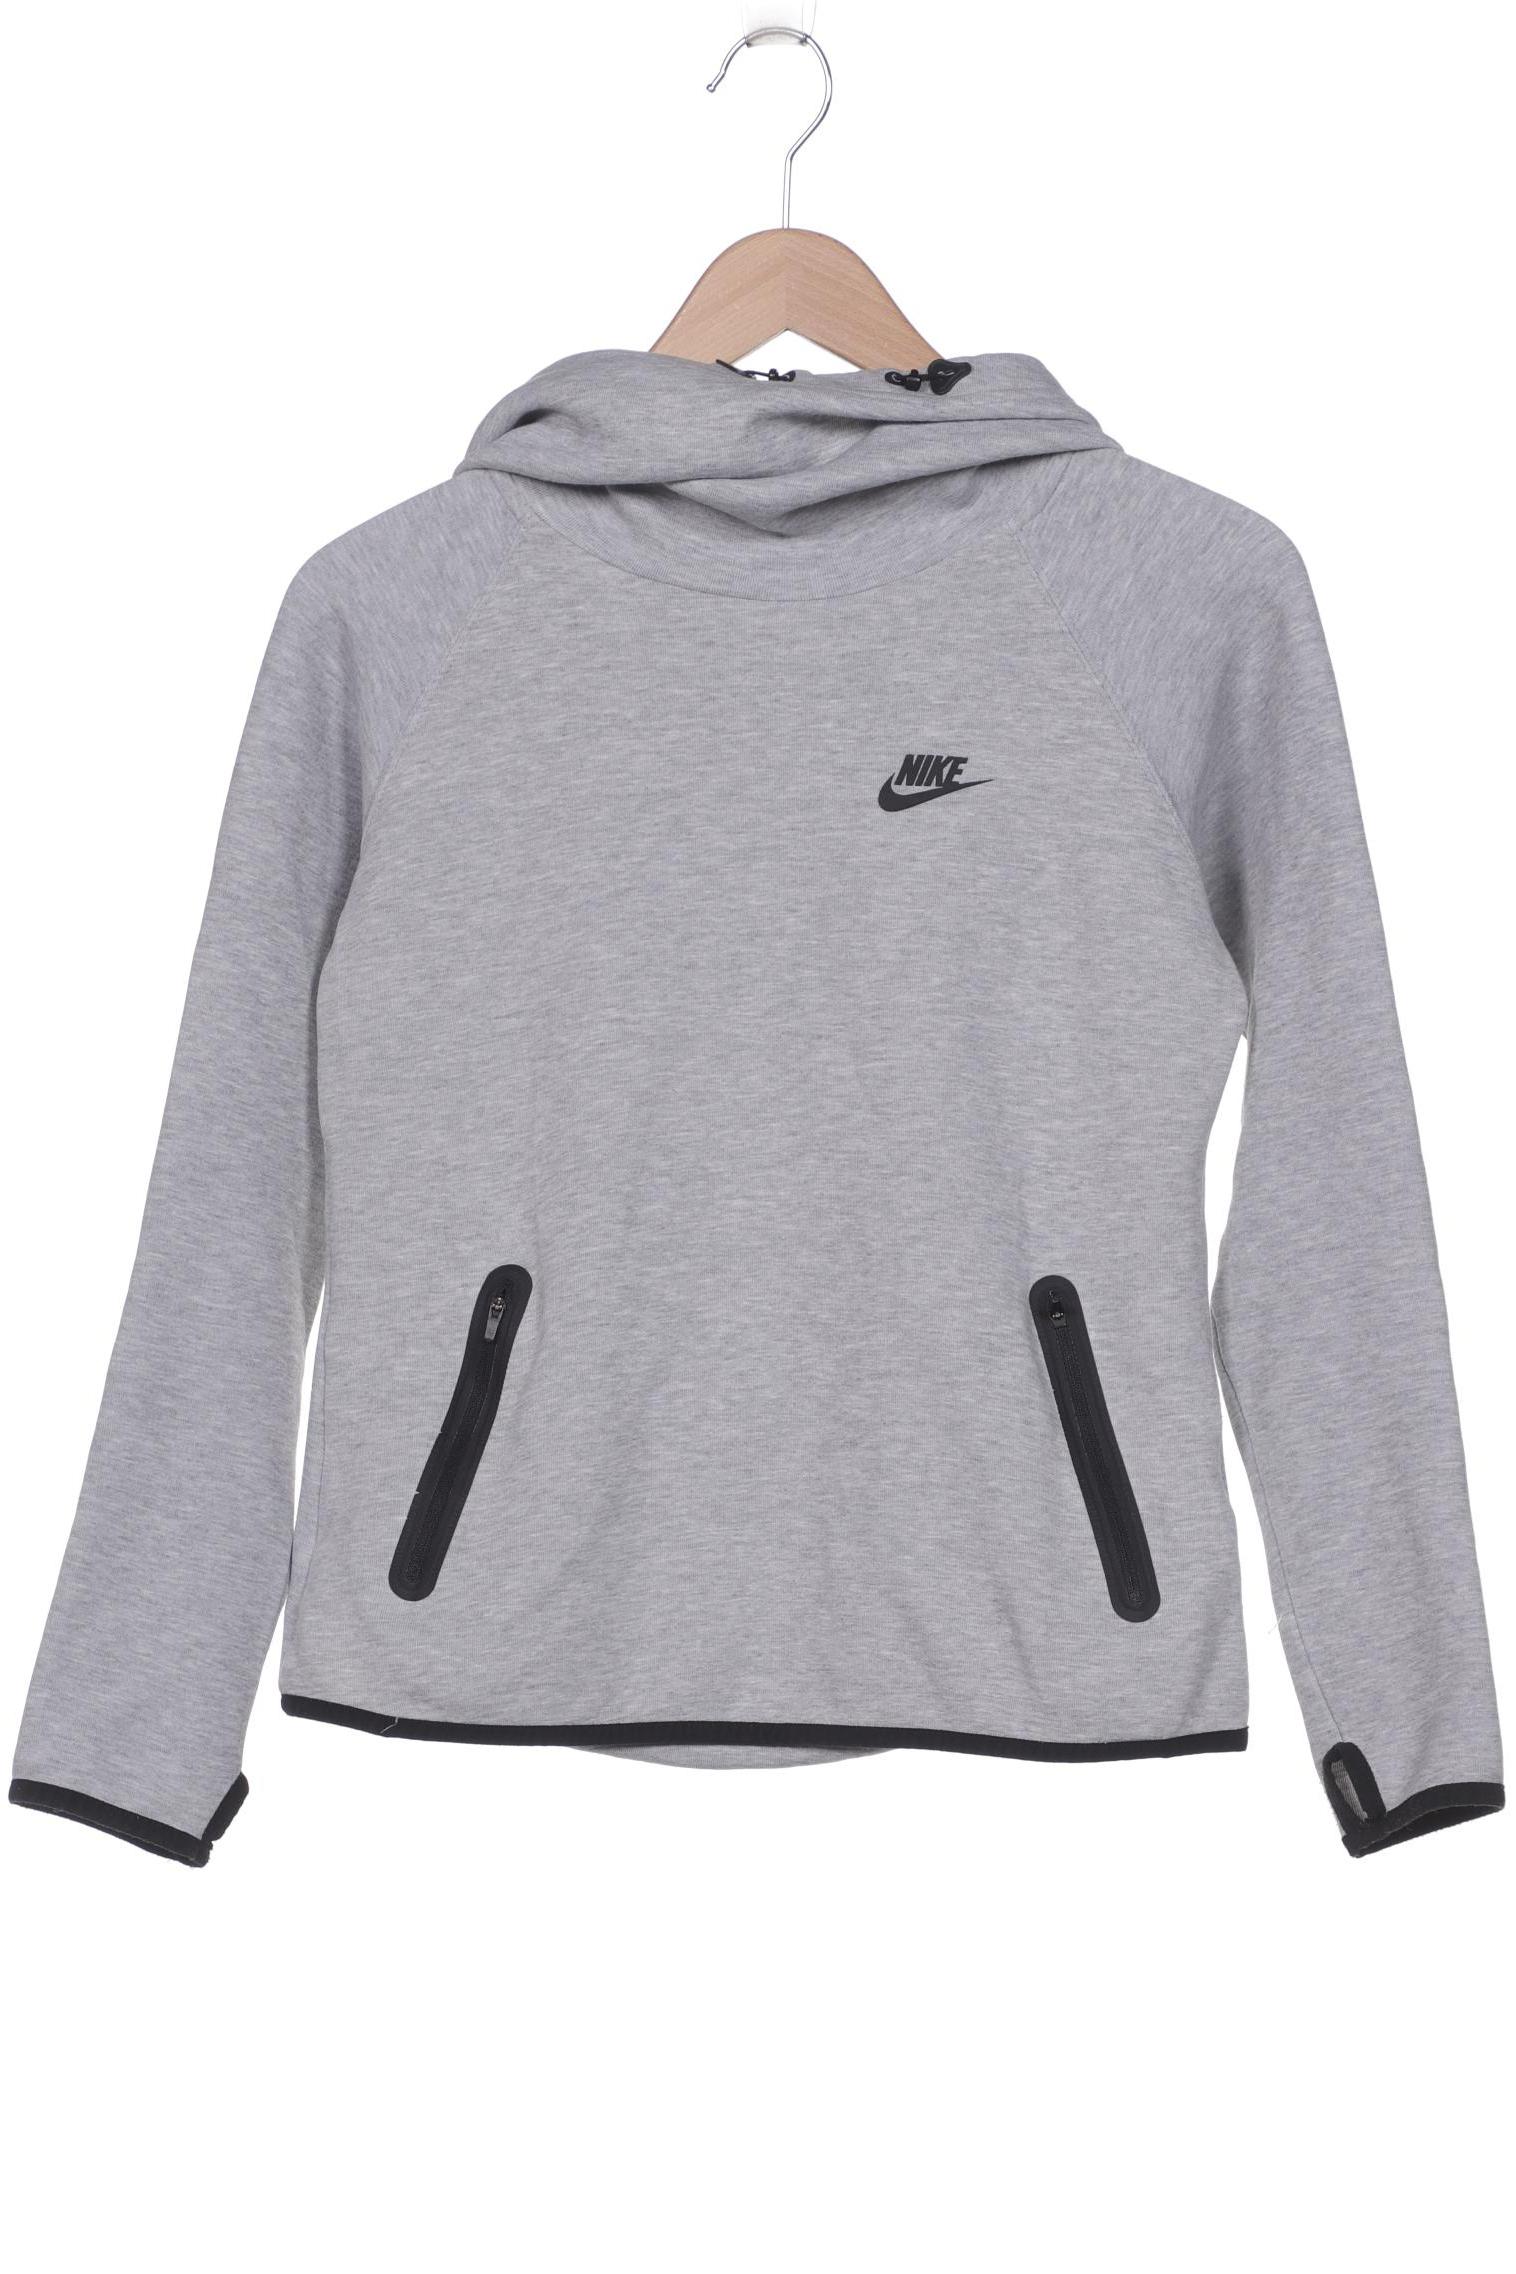 Nike Damen Kapuzenpullover, grau von Nike